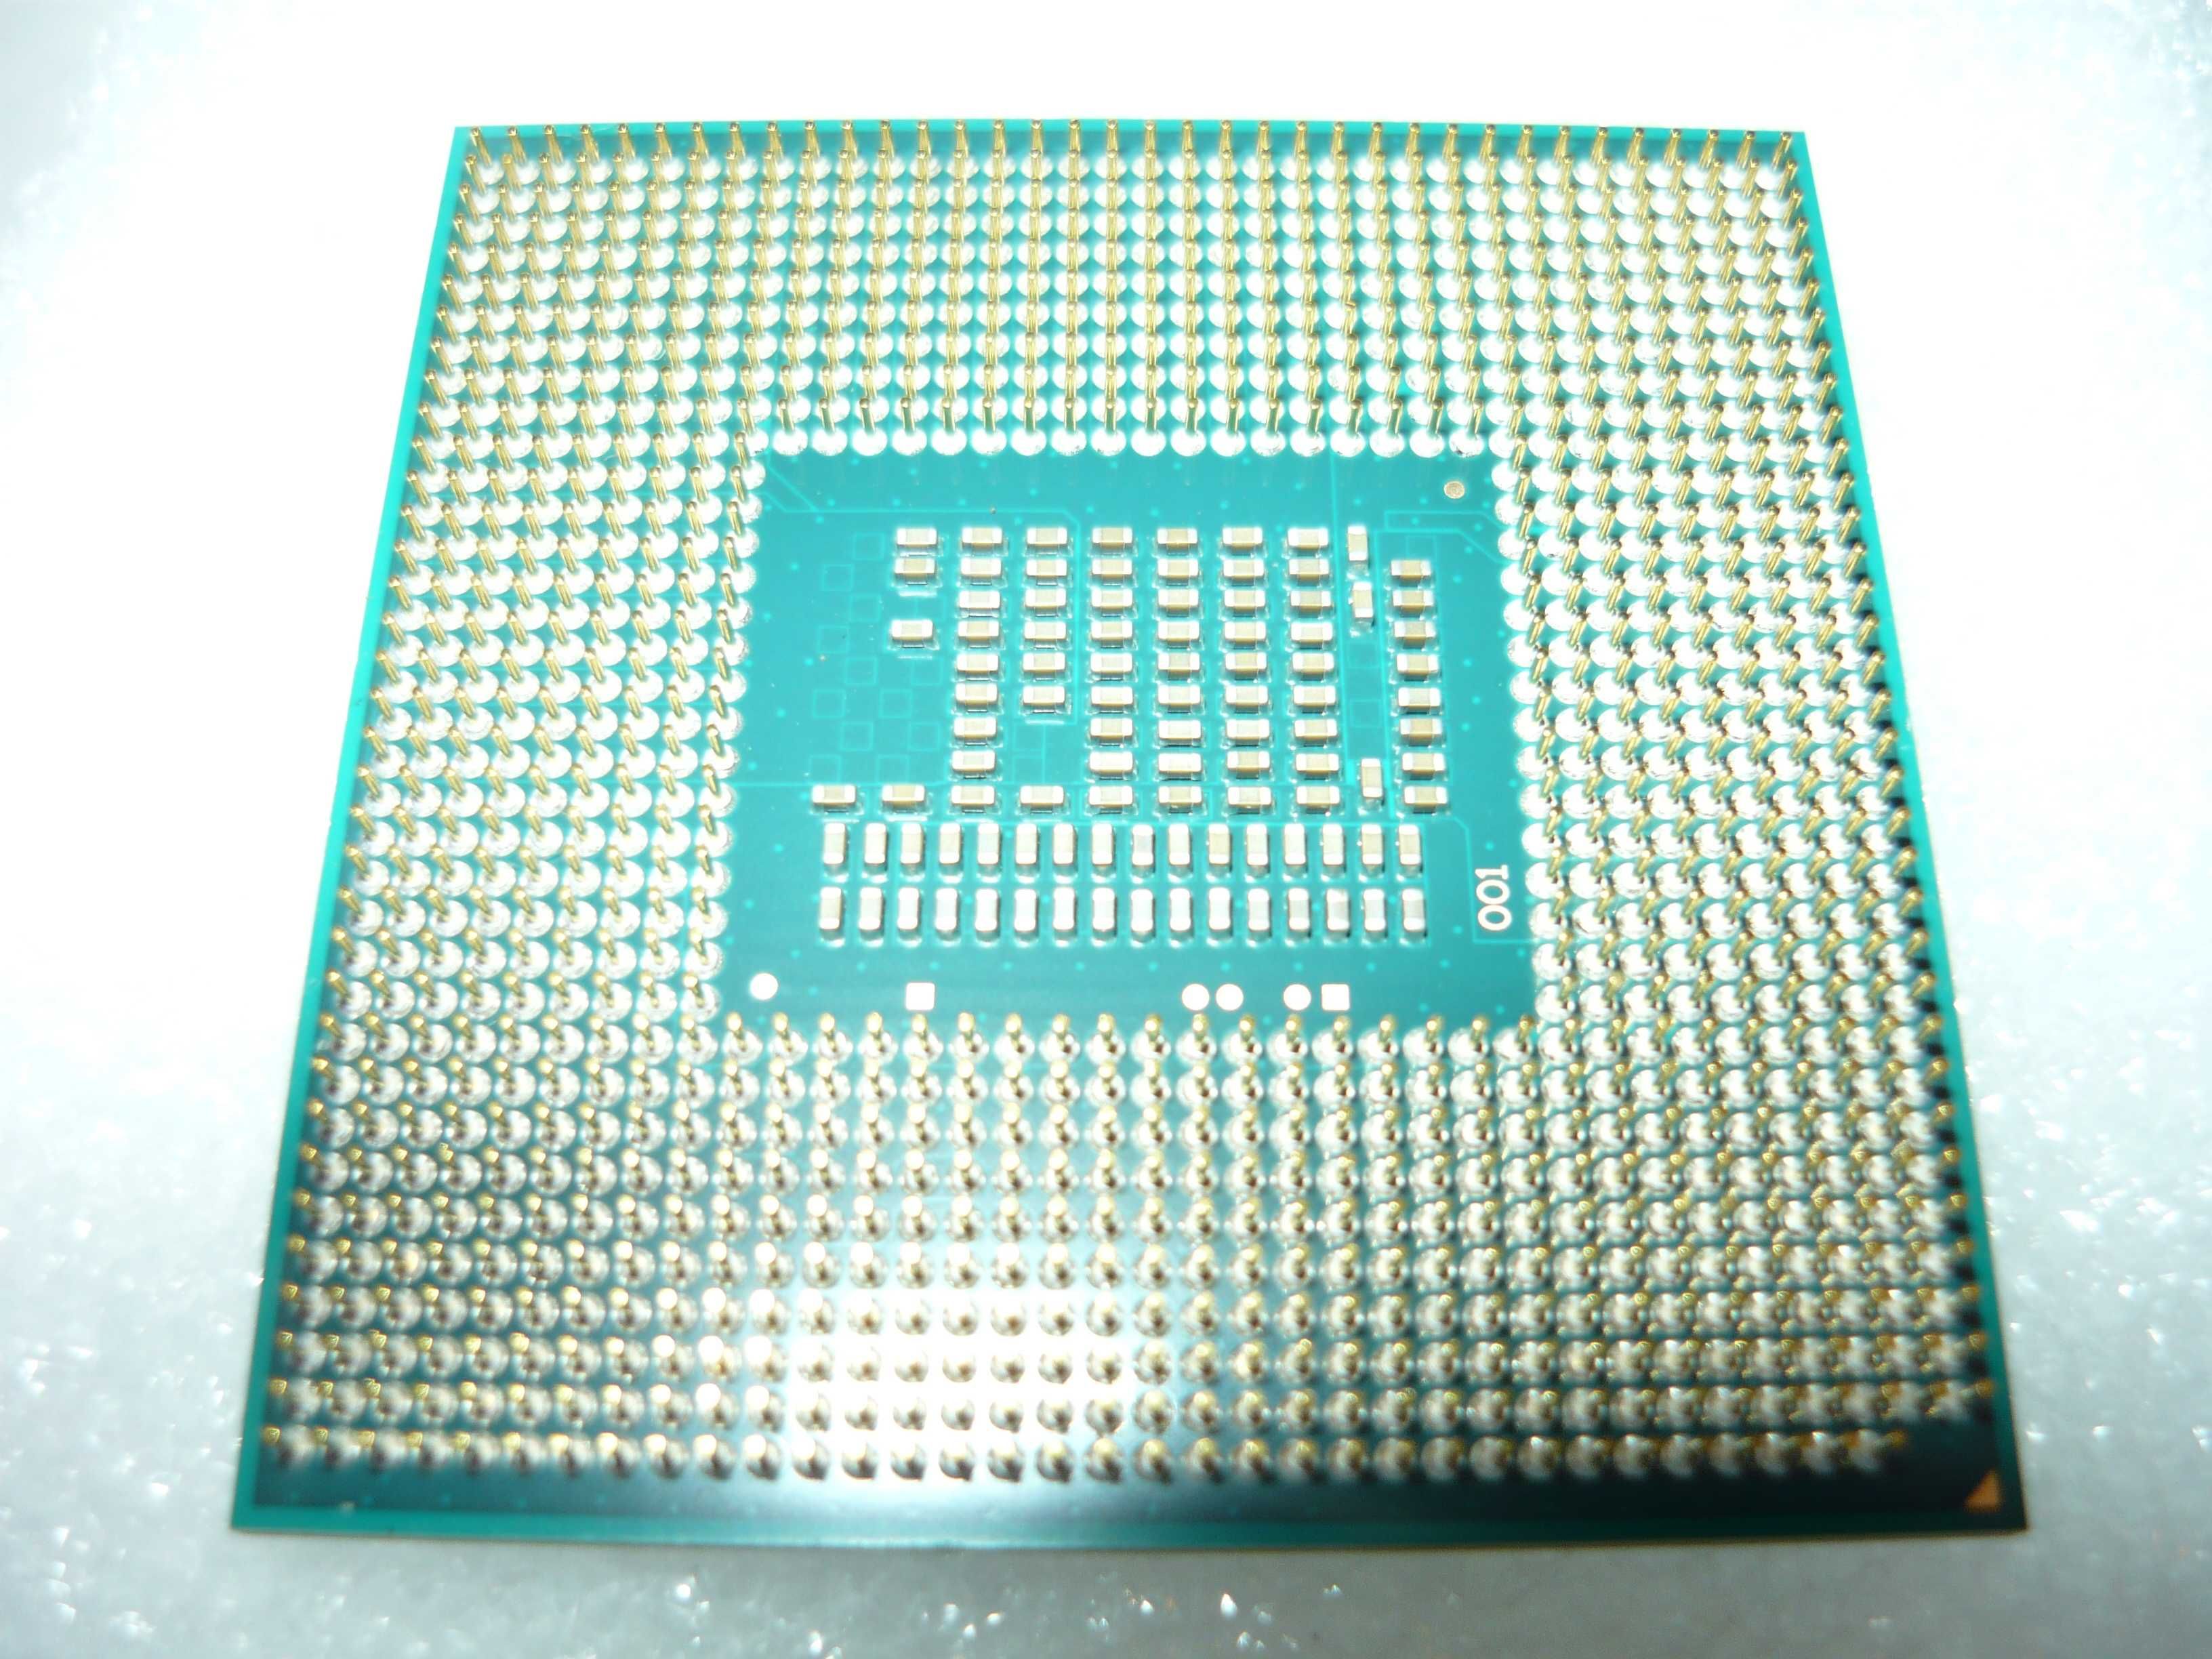 Procesor Intel Celeron 2.0 GHz PGA988 SR102 laptop mobilny